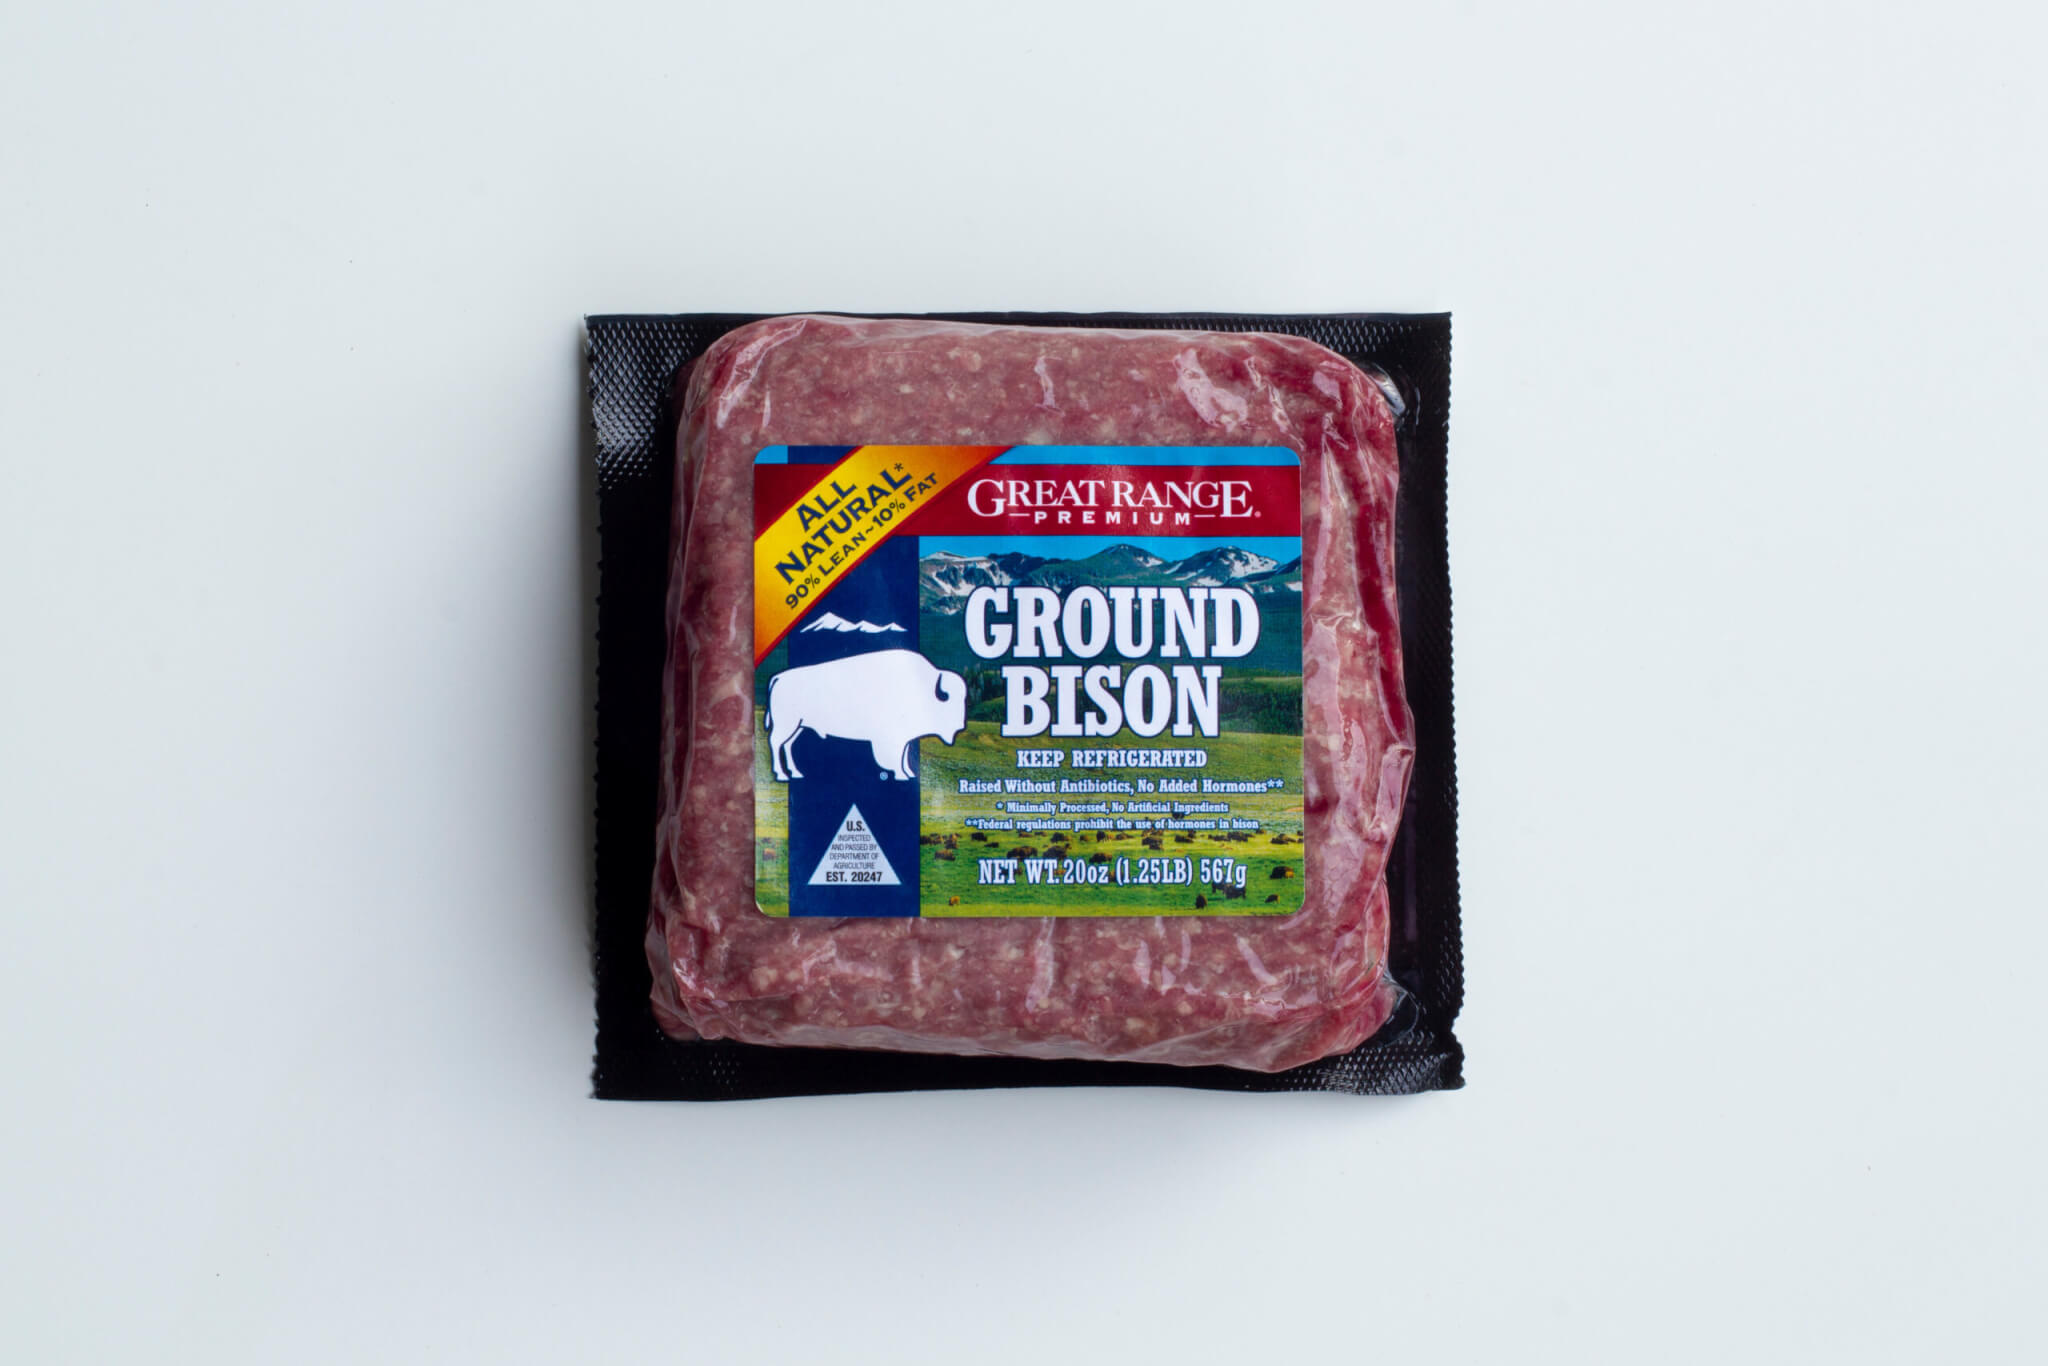 Great Range ground bison meat.